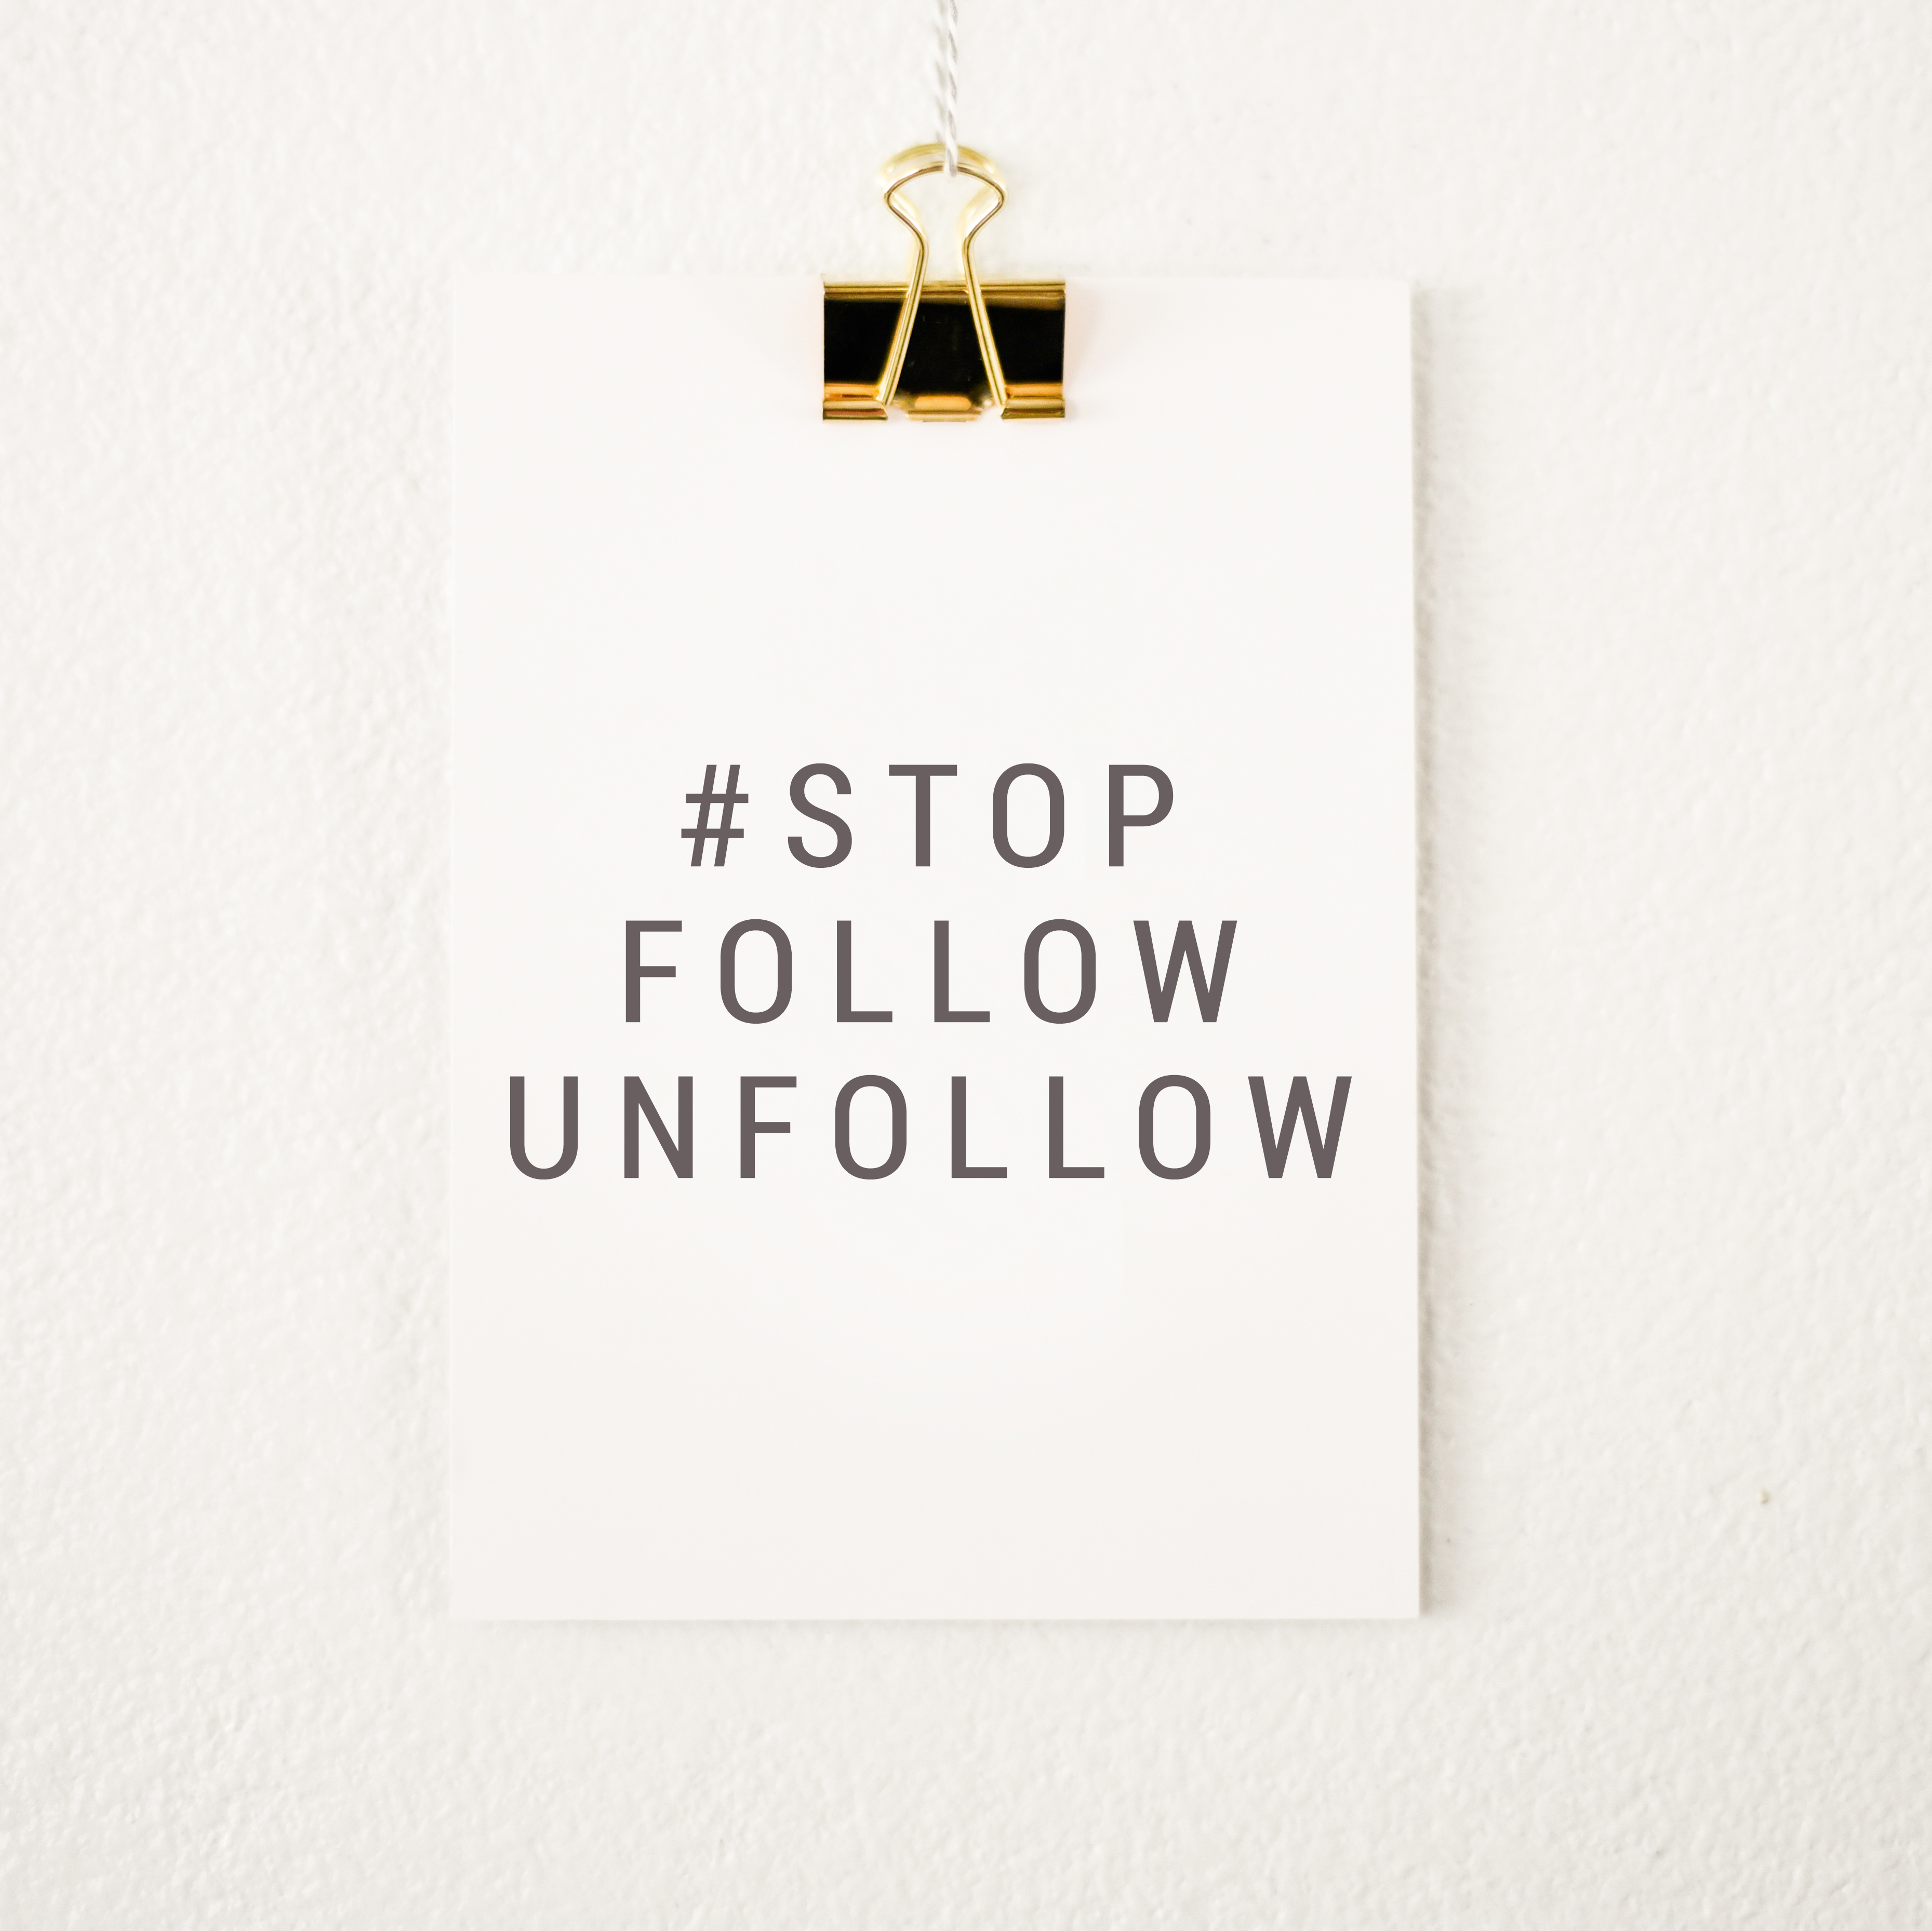 5 key reasons to stop follow unfollow - instagram follow and unflow